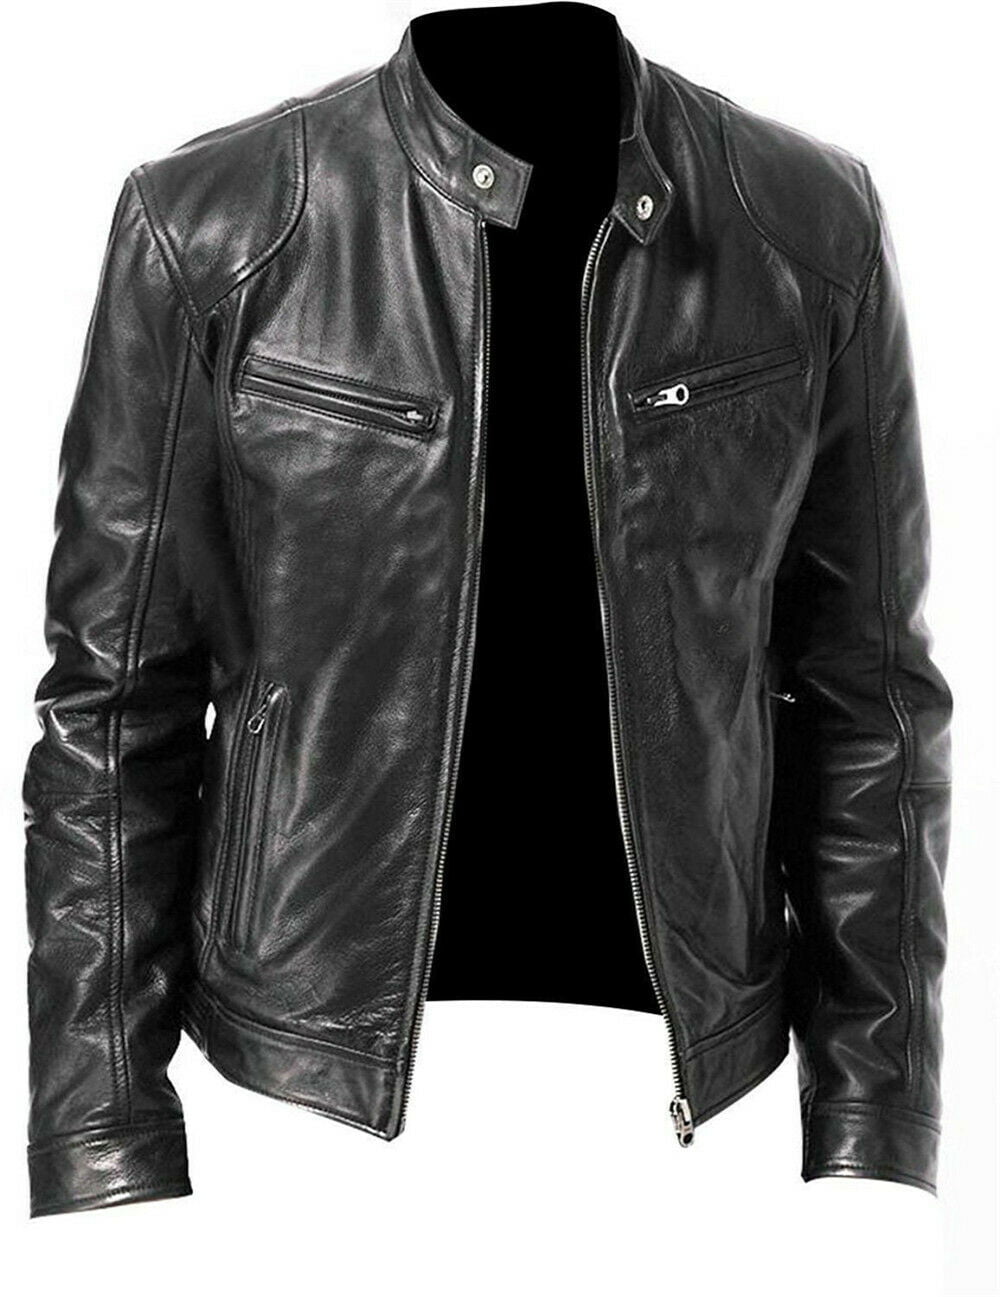 Leisure Men's Leather Jacket Biker Motorcycle Coat Slim Fit Outwear Jackets TOP